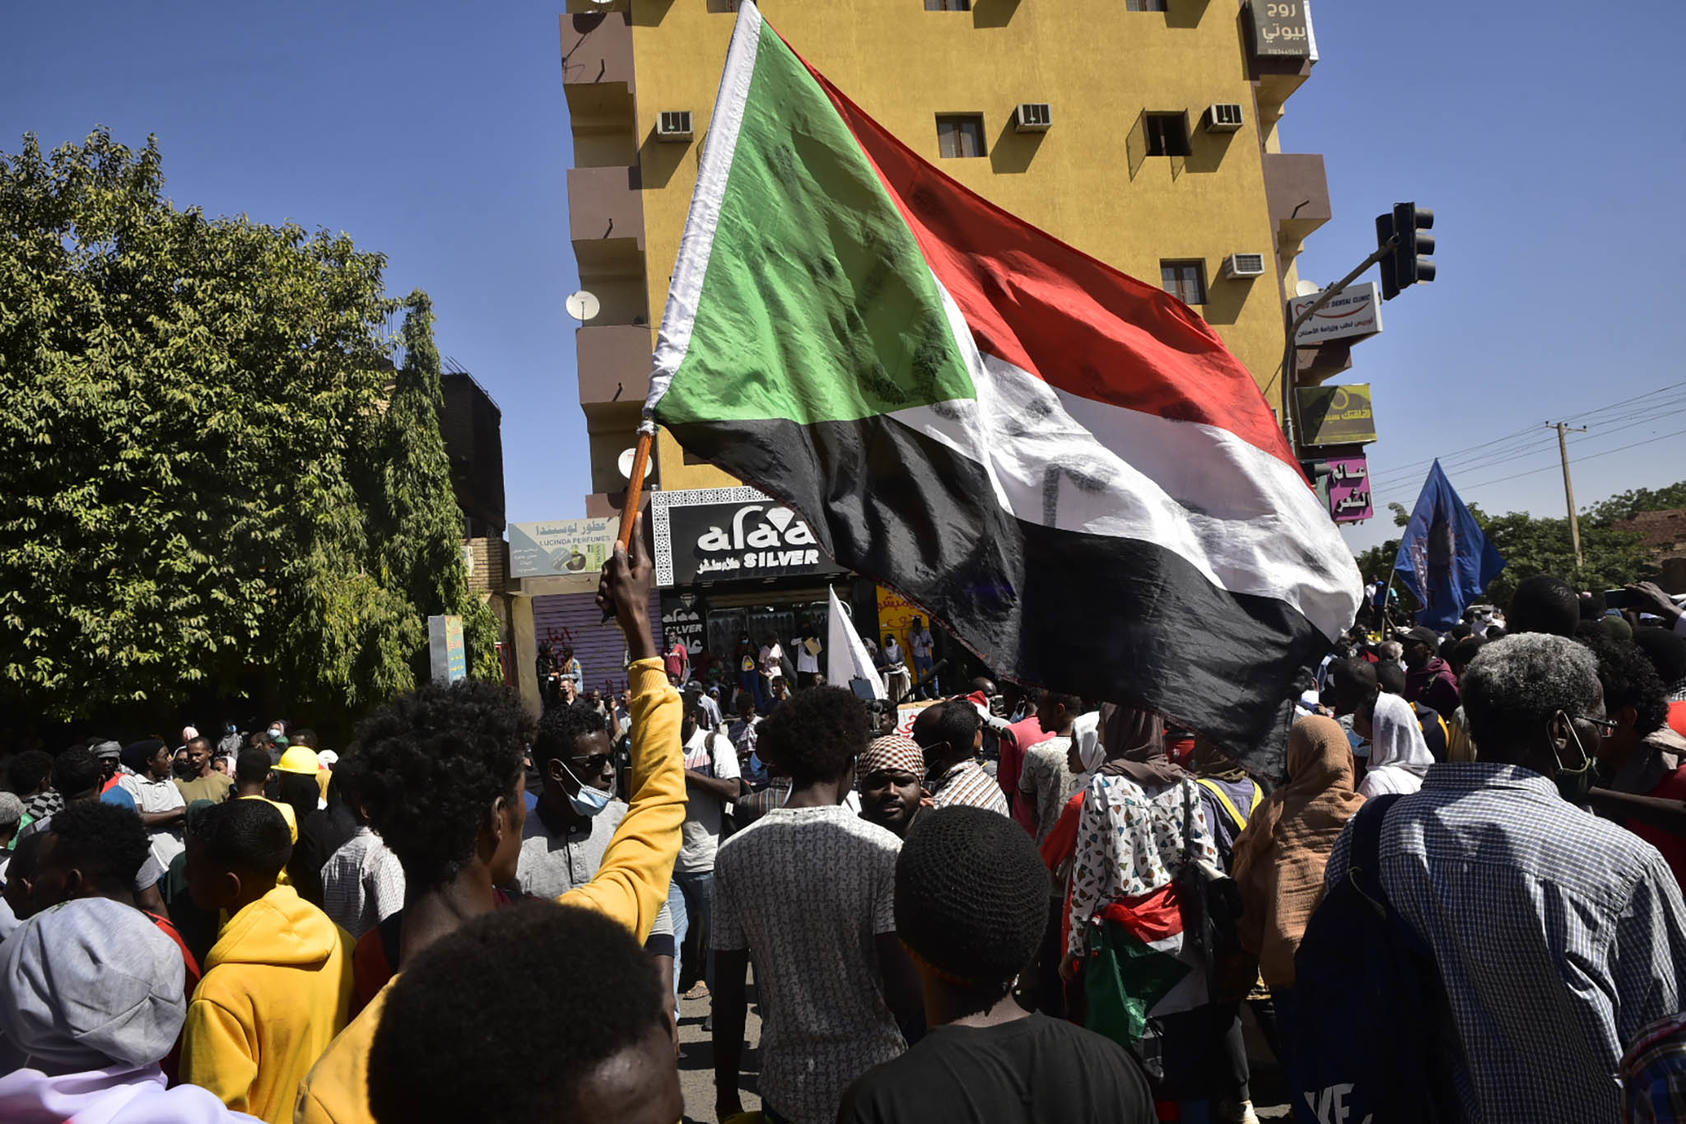 A demonstration in Khartoum, Sudan. January 24, 2022. (Faiz Abubakar Muhamed/The New York Times)